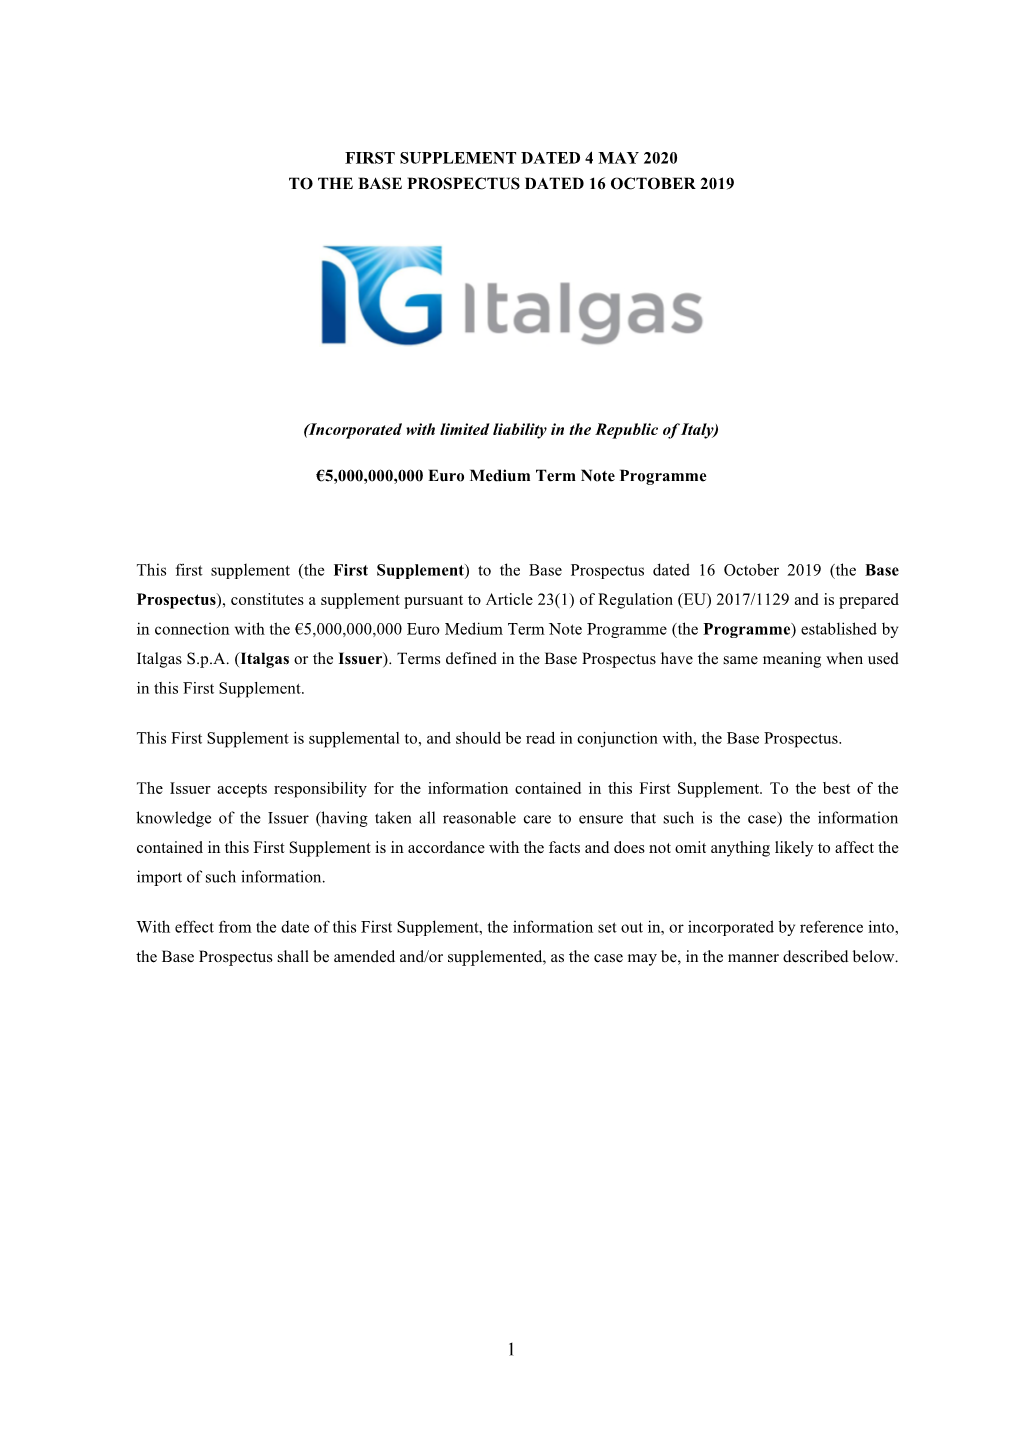 Italgas S.P.A. (Italgas Or the Issuer)